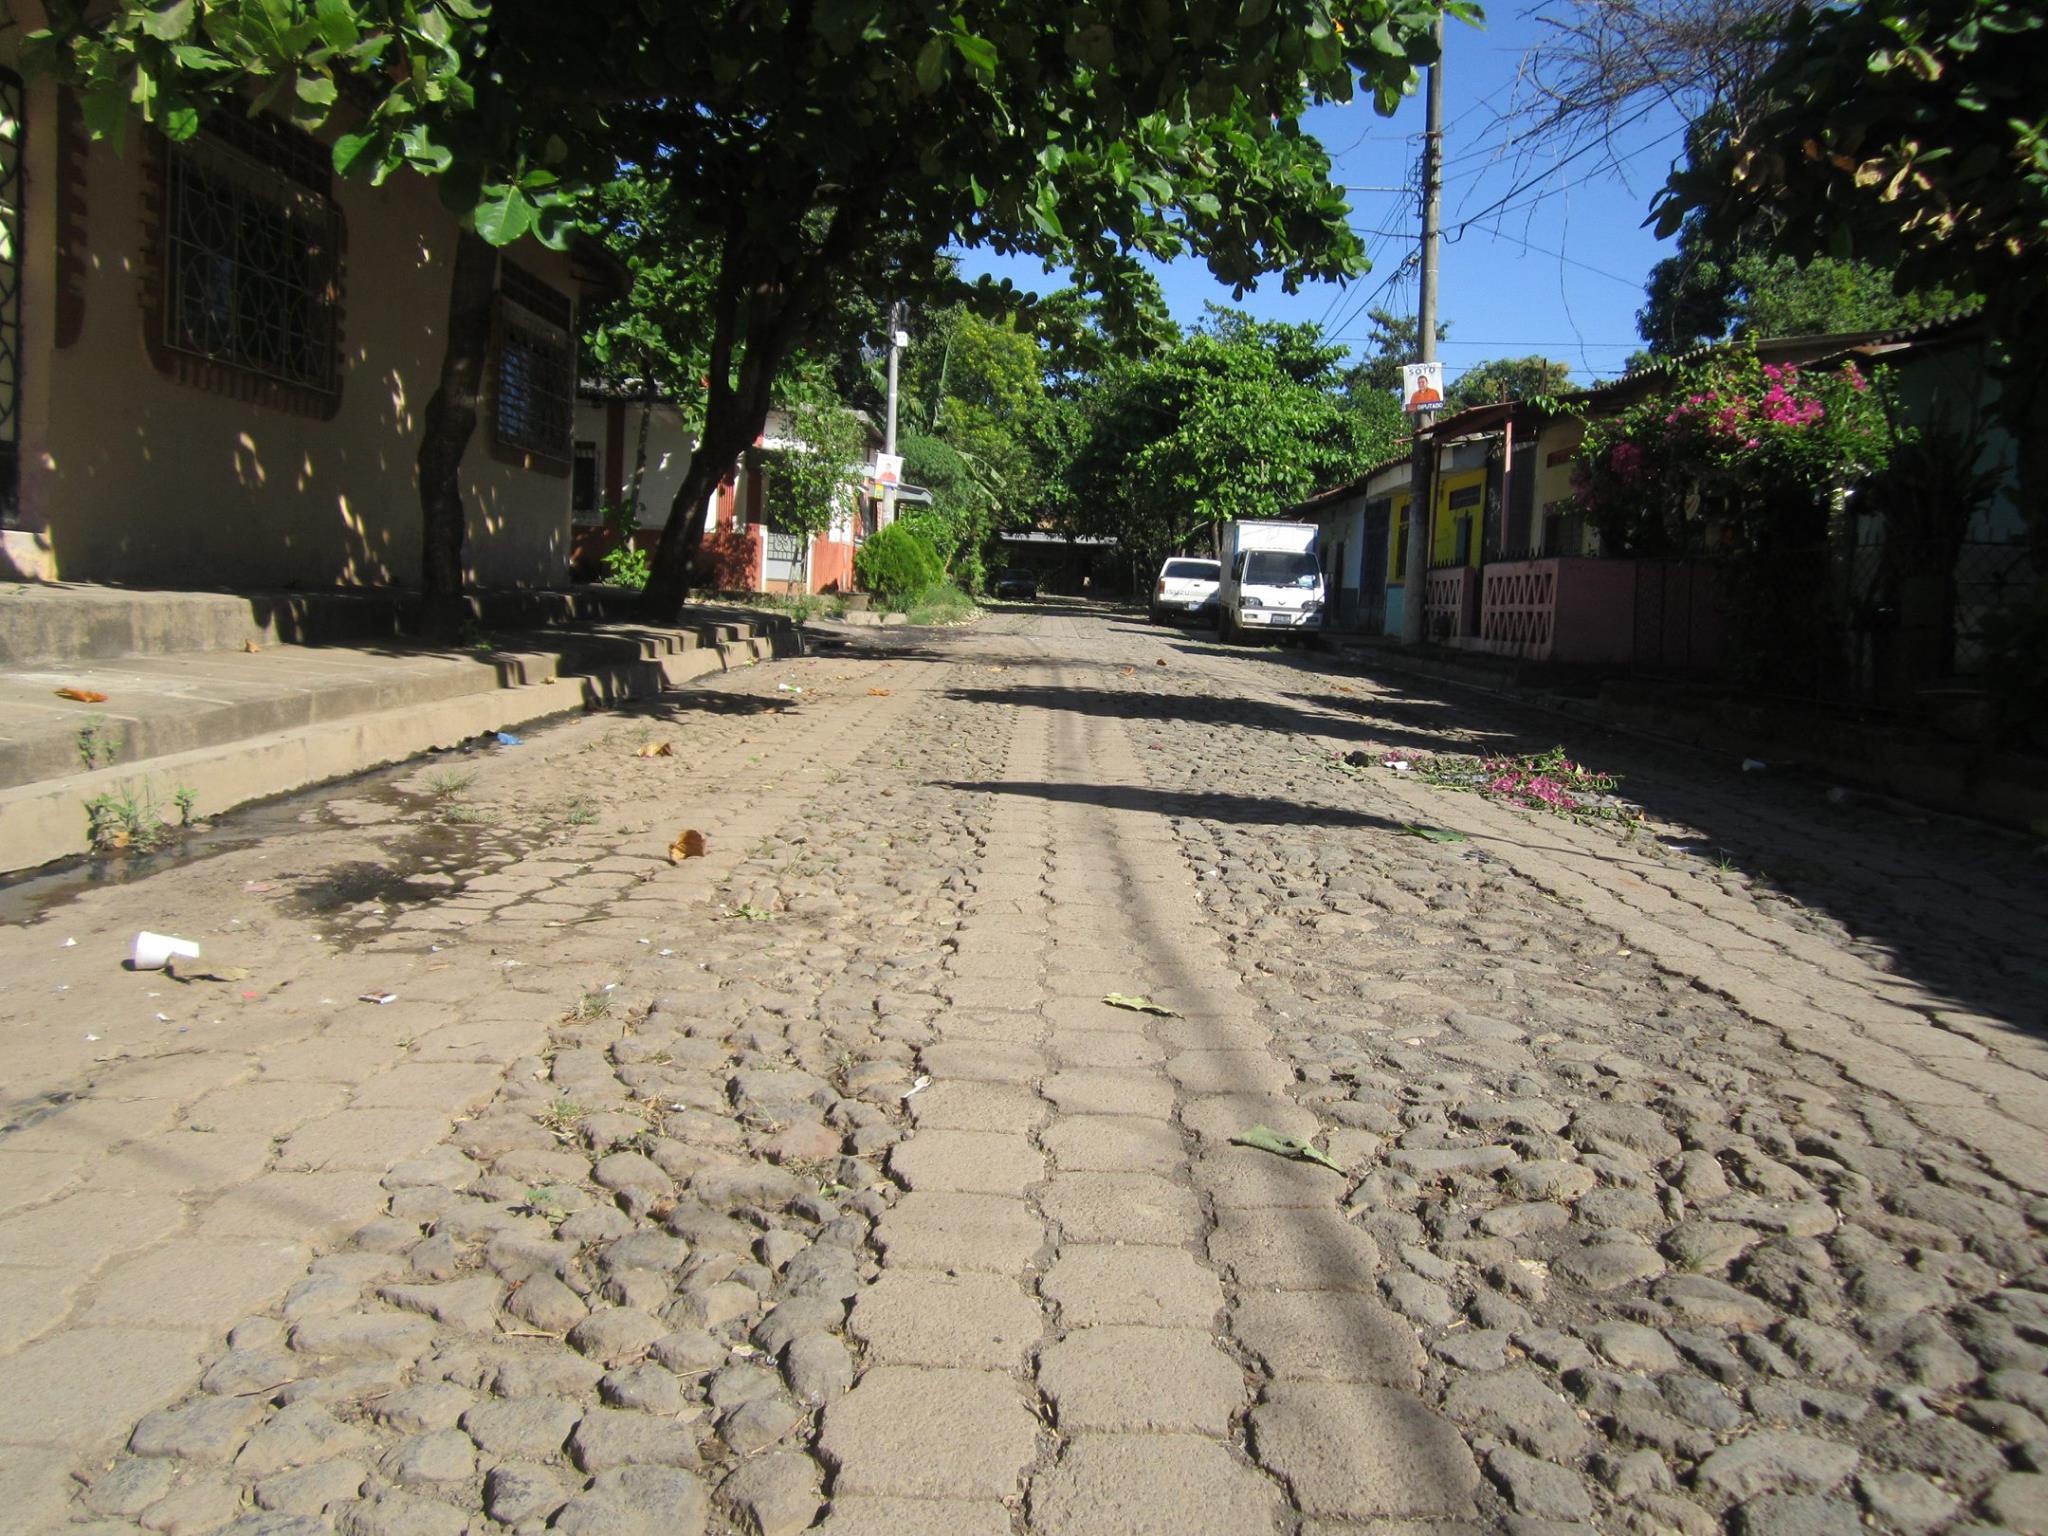 Reparación de adoquinado en calle de Colonia Santa Clara